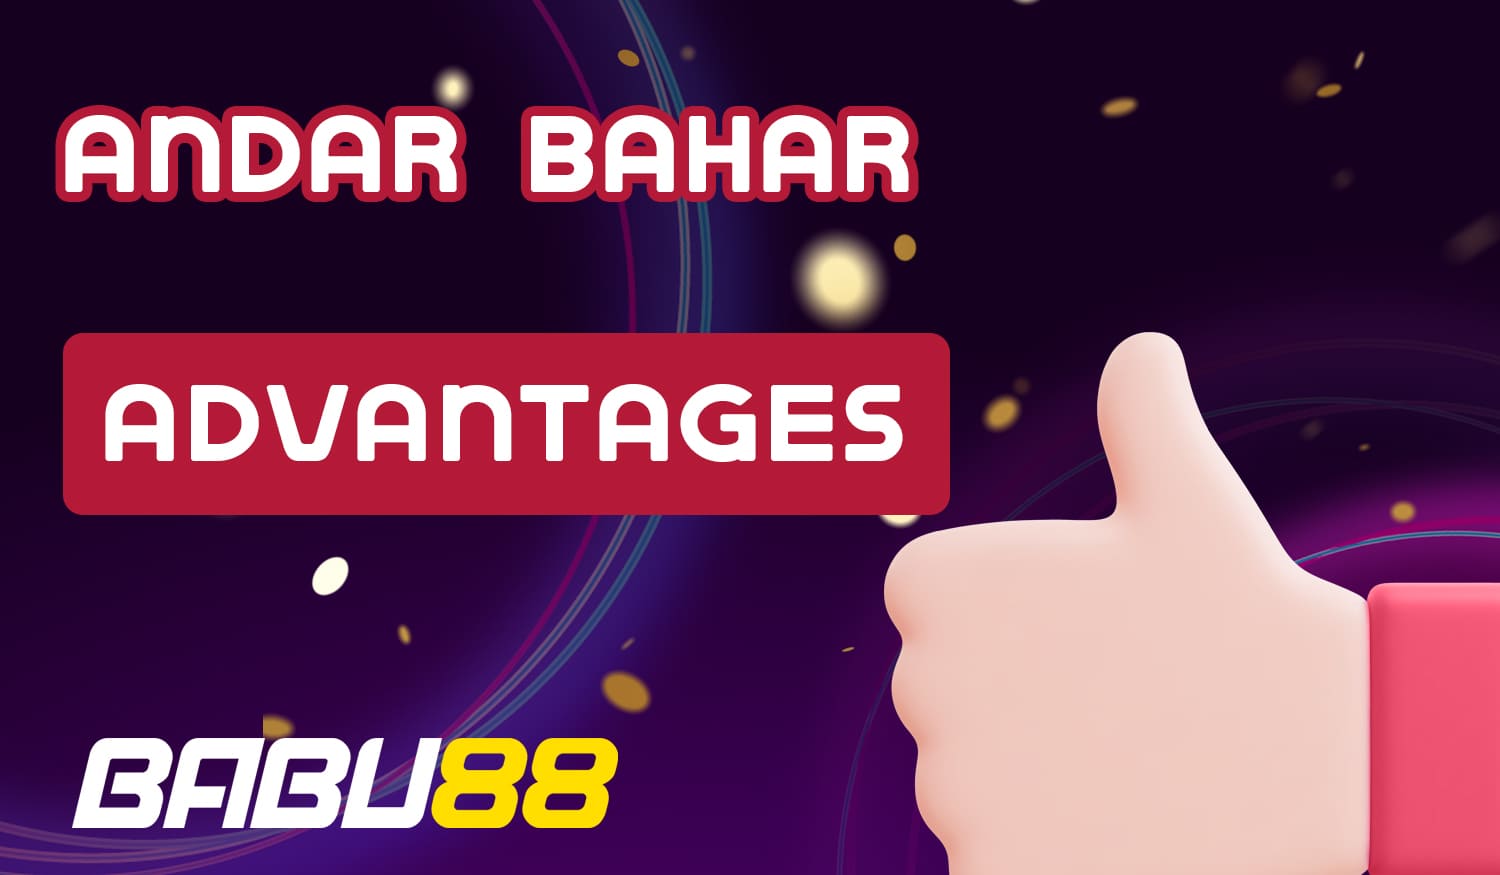 List of Babu88 benefits for playing Andar Bahar